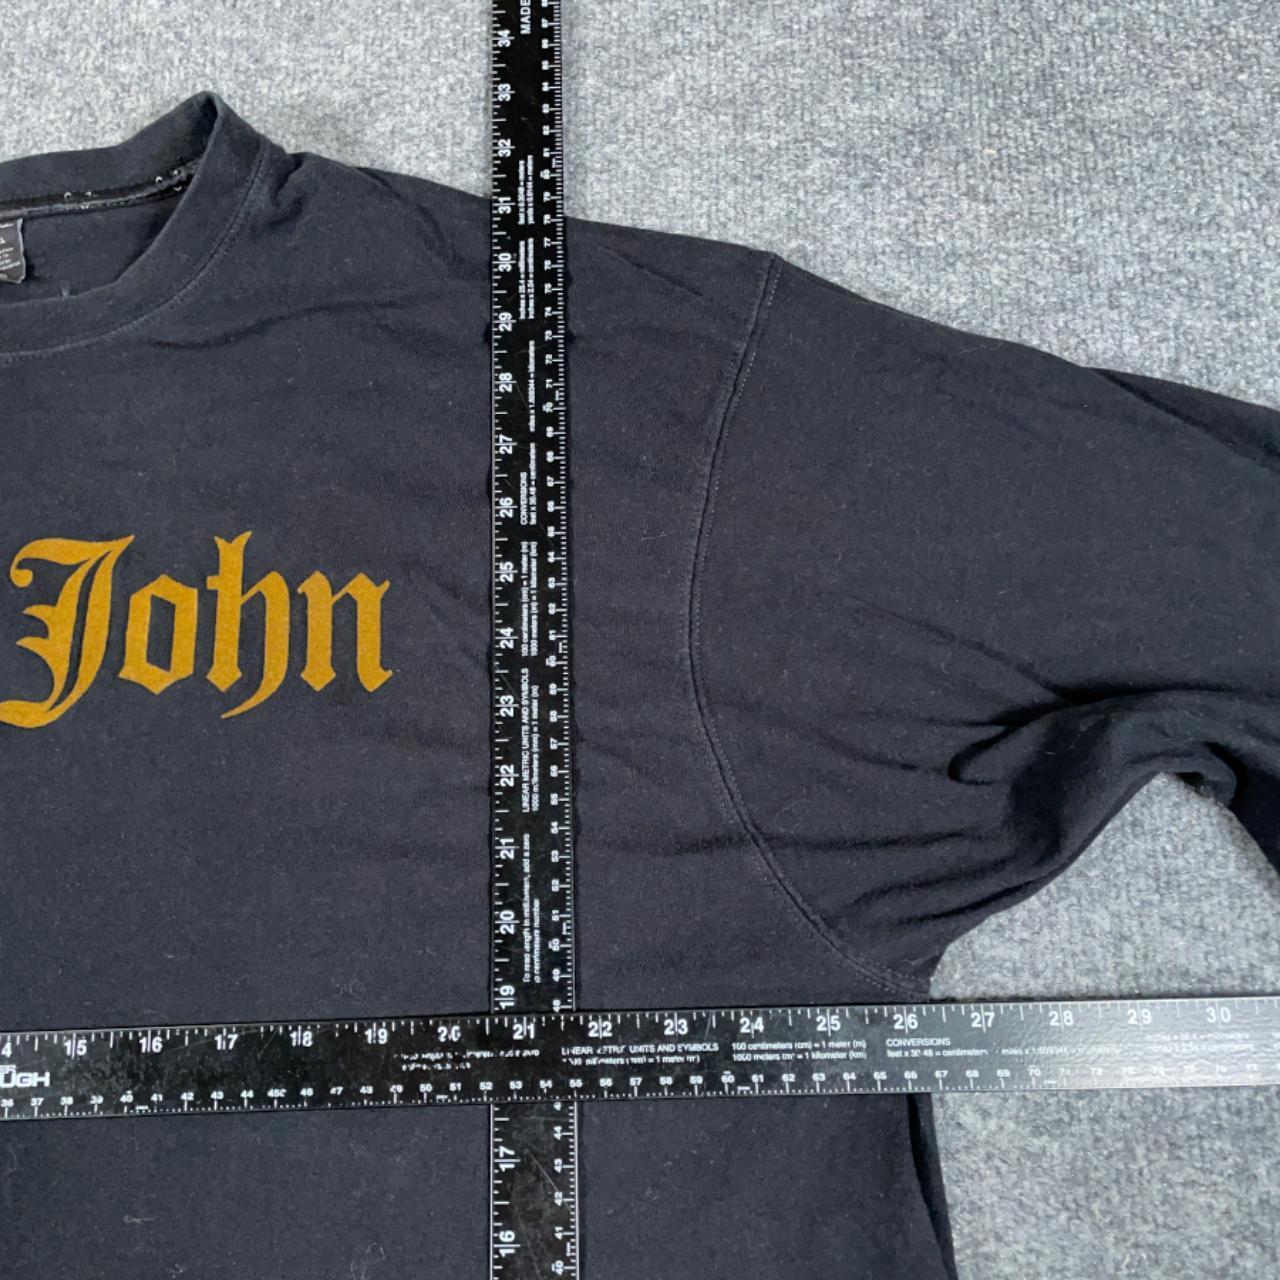 Sean John Men's Black and Gold T-shirt (4)